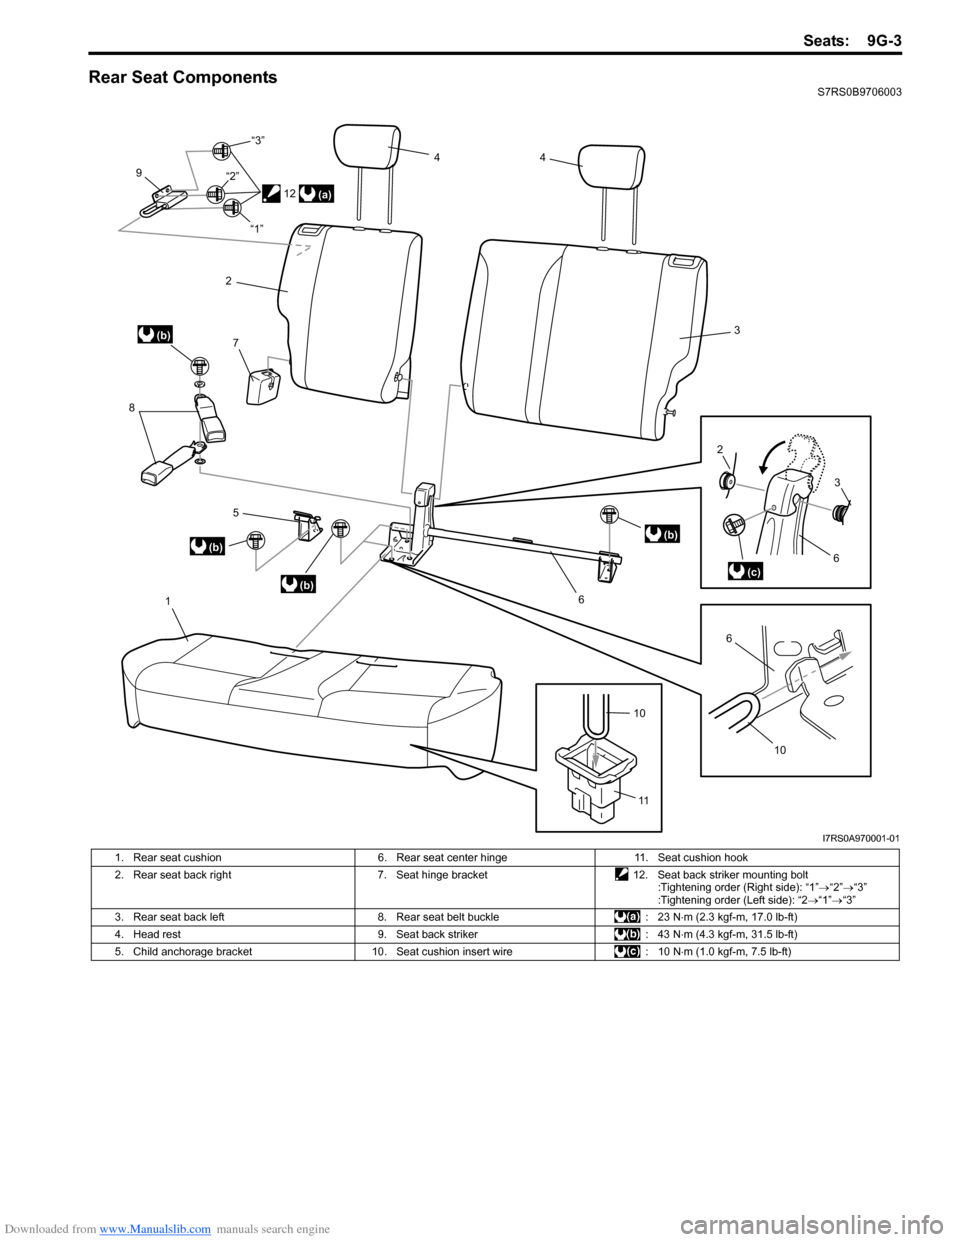 SUZUKI SWIFT 2005 2.G Service Workshop Manual Downloaded from www.Manualslib.com manuals search engine Seats: 9G-3
Rear Seat ComponentsS7RS0B9706003
1
5
(b)
(b)
(b)
8
7
9
2
4
4
3
(b)
6
6(c)
2
3
10
6
(a)
10
11
12
“1”
“2”
“3”
I7RS0A9700